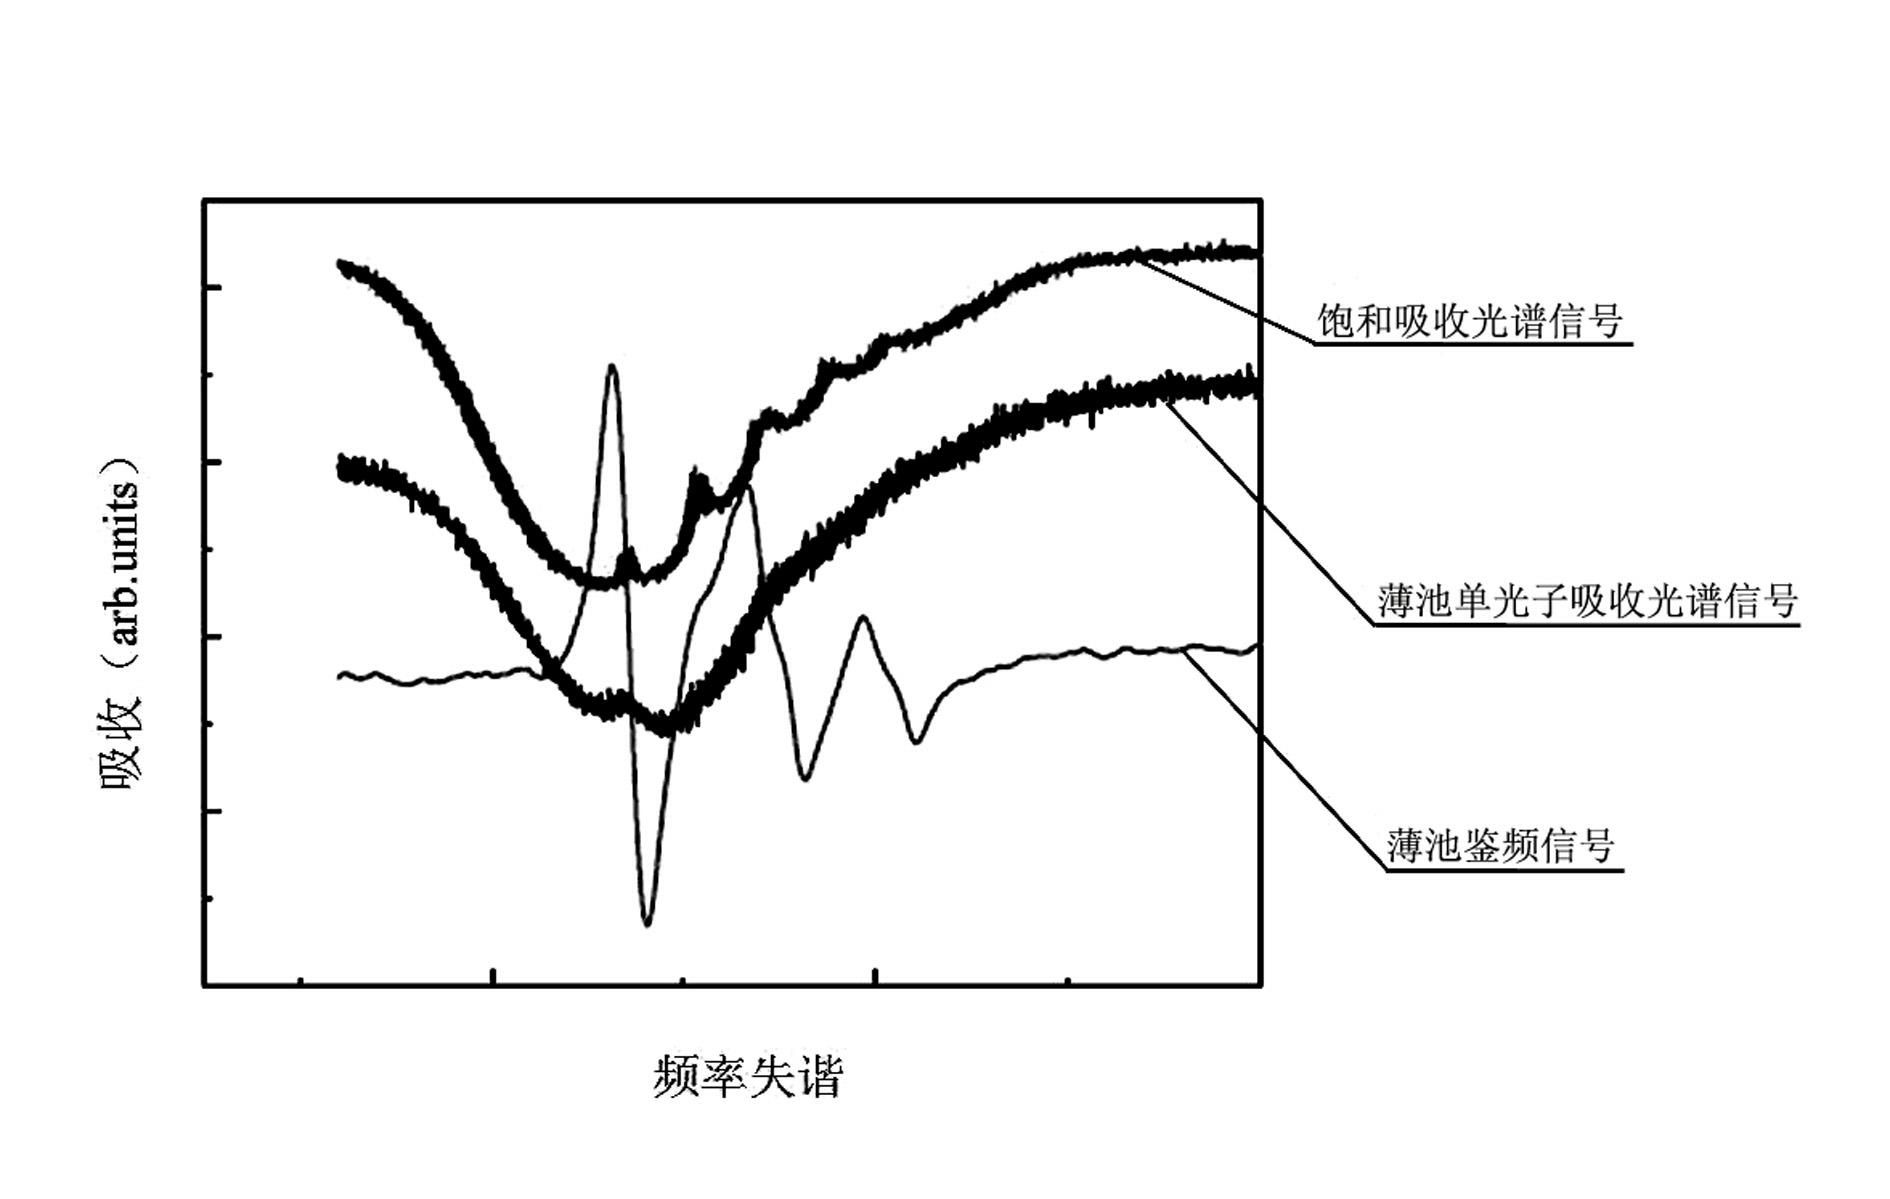 Thin-cell Doppler-broadening-free absorption spectrum frequency regulator